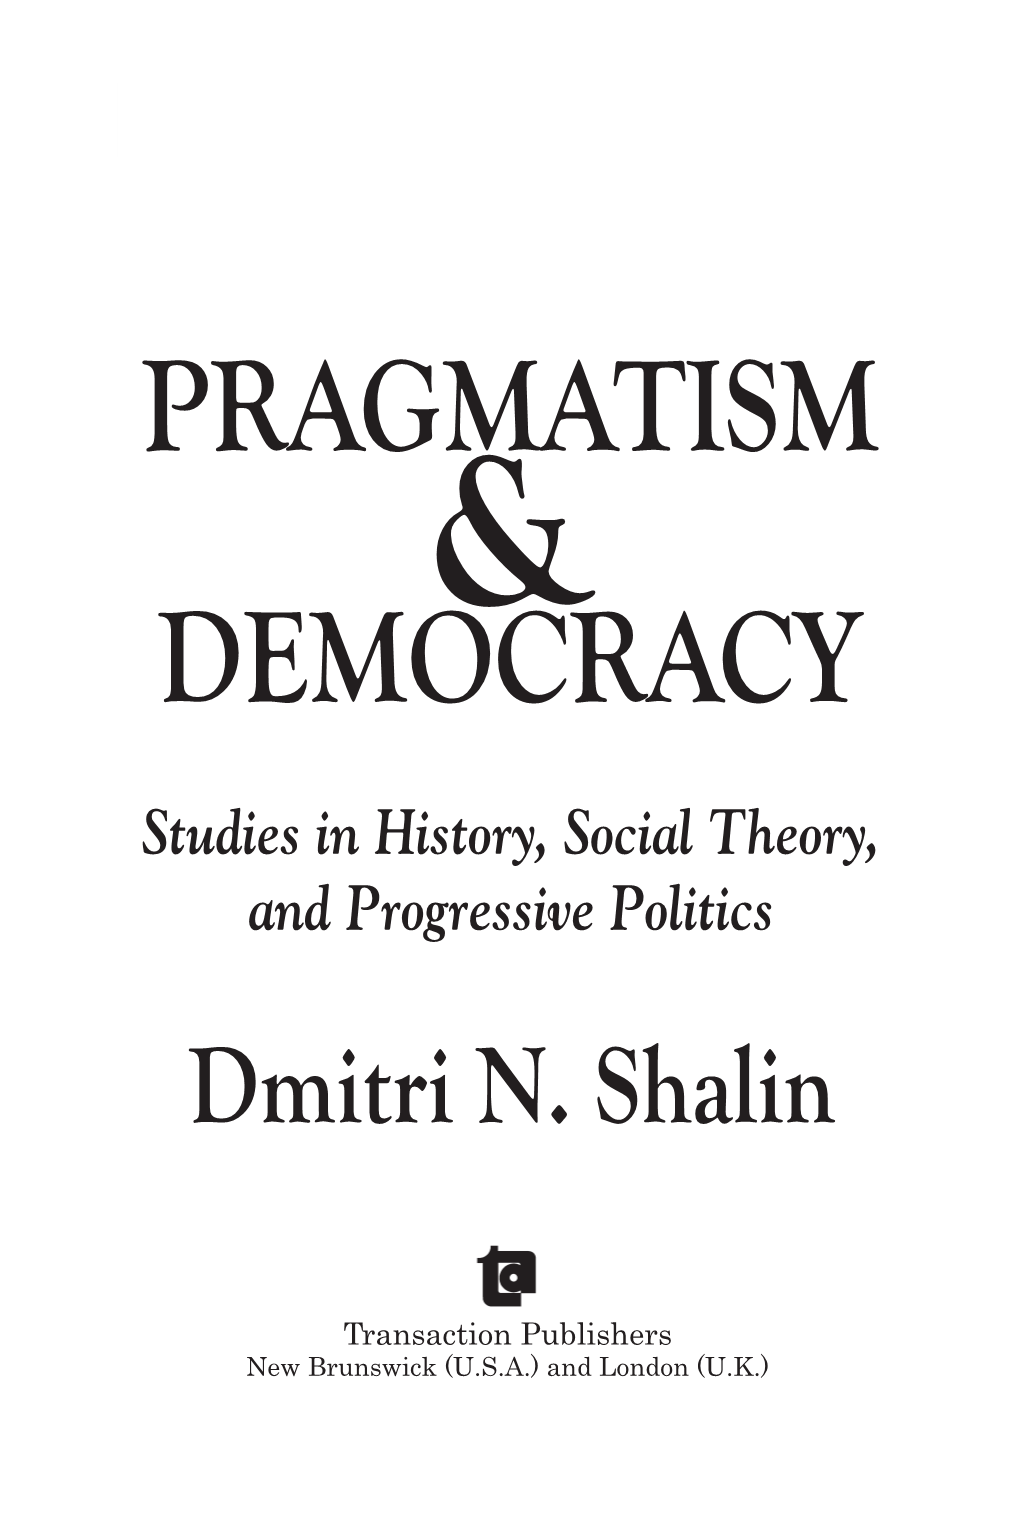 Pragmatism and Democracy : Studies in History, Social Theory, and Progressive Politics / Dmitri N